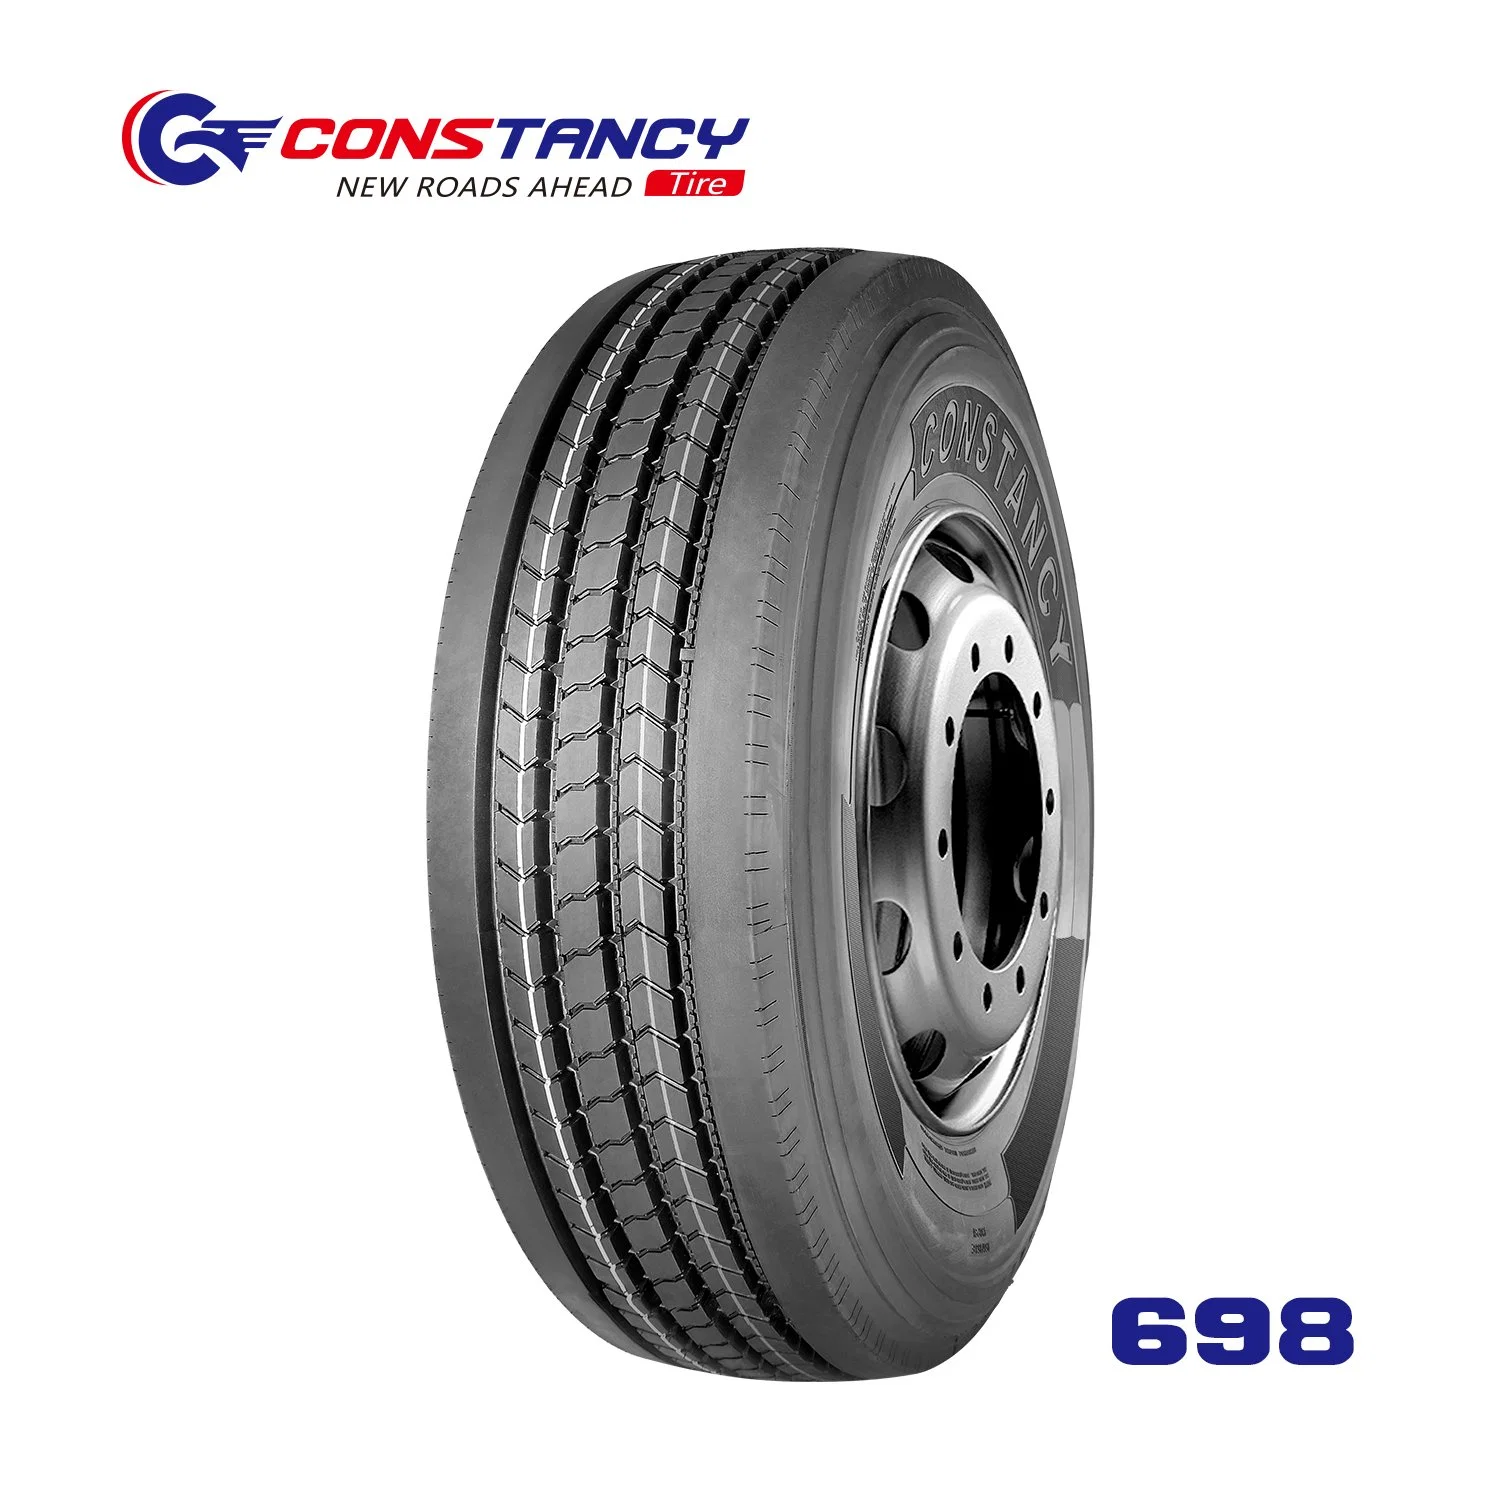 Constancy Truck Bus Tyre, TBR, Light Truck Tyre, Steer and Trailer Tyre 698 (295/80R22.5, 315/80R22.5, 11R22.5)